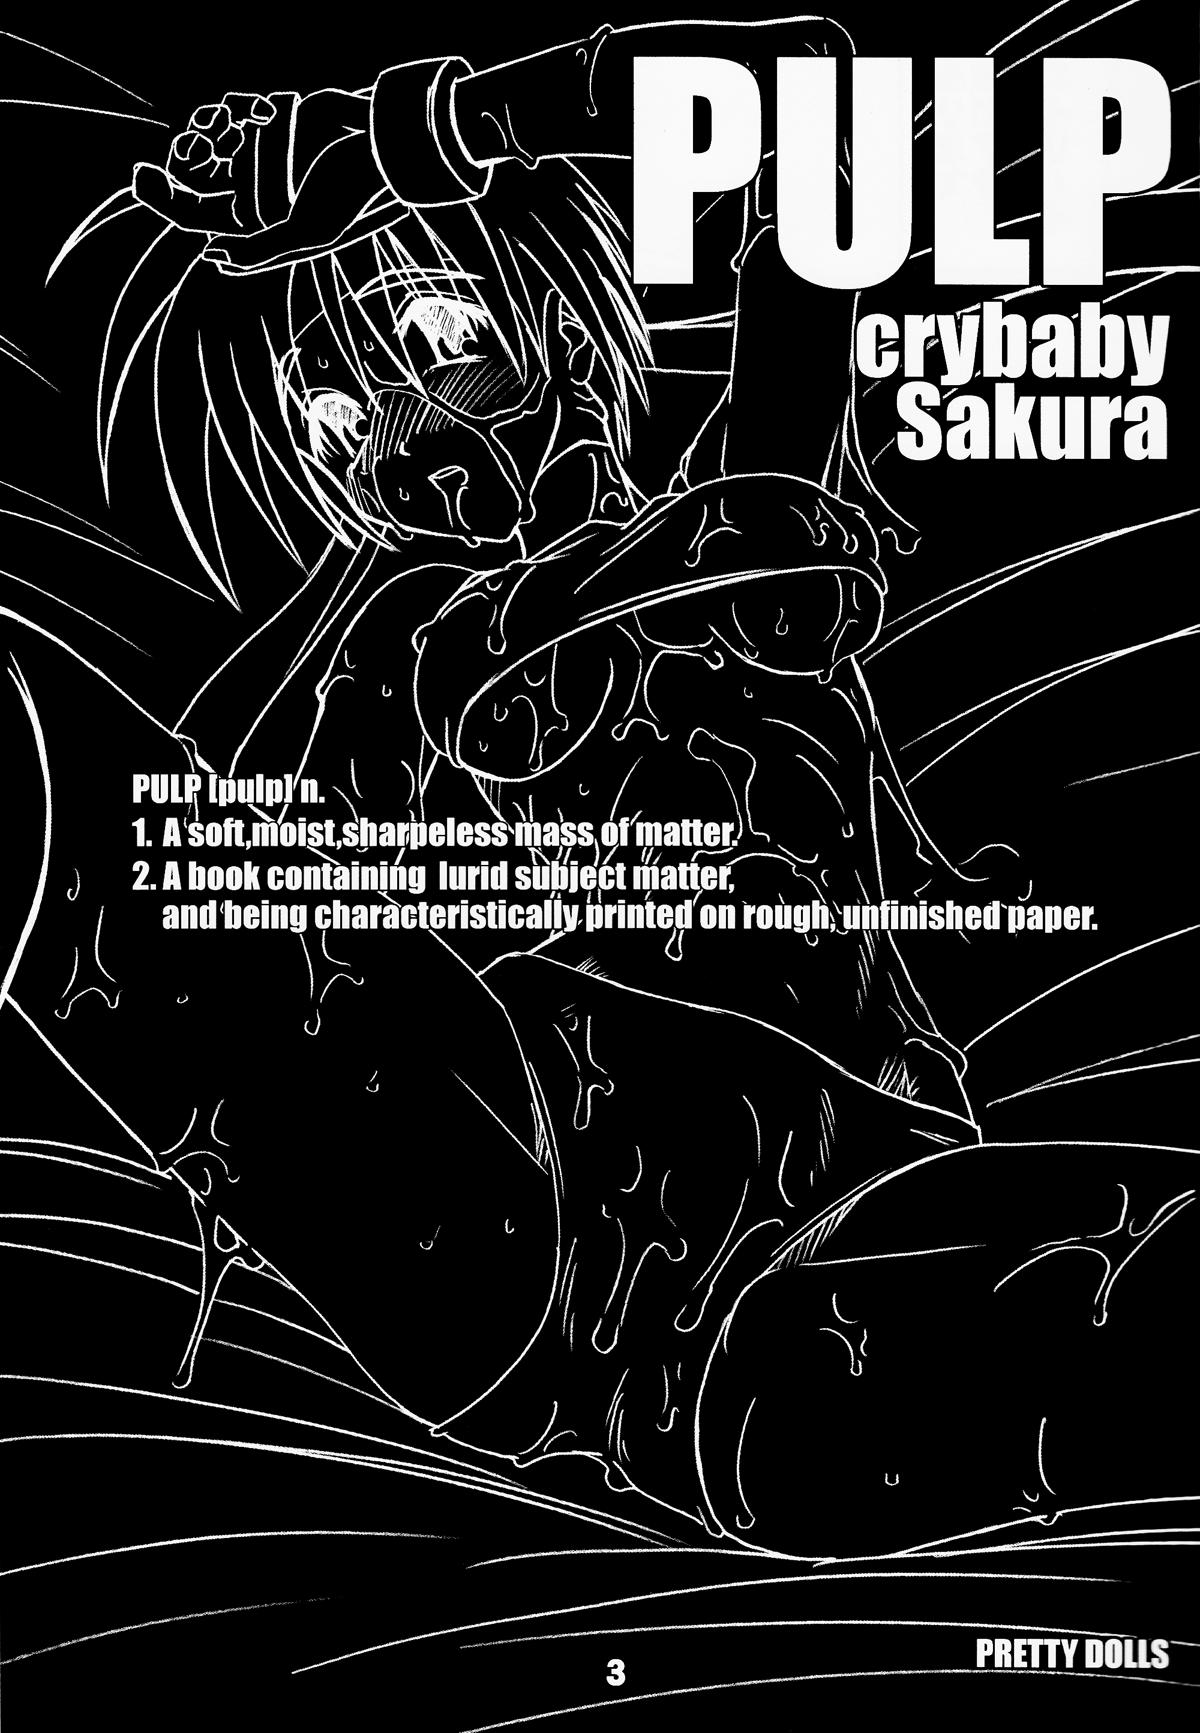 China PULP crybaby Sakura - Street fighter Juicy - Page 3